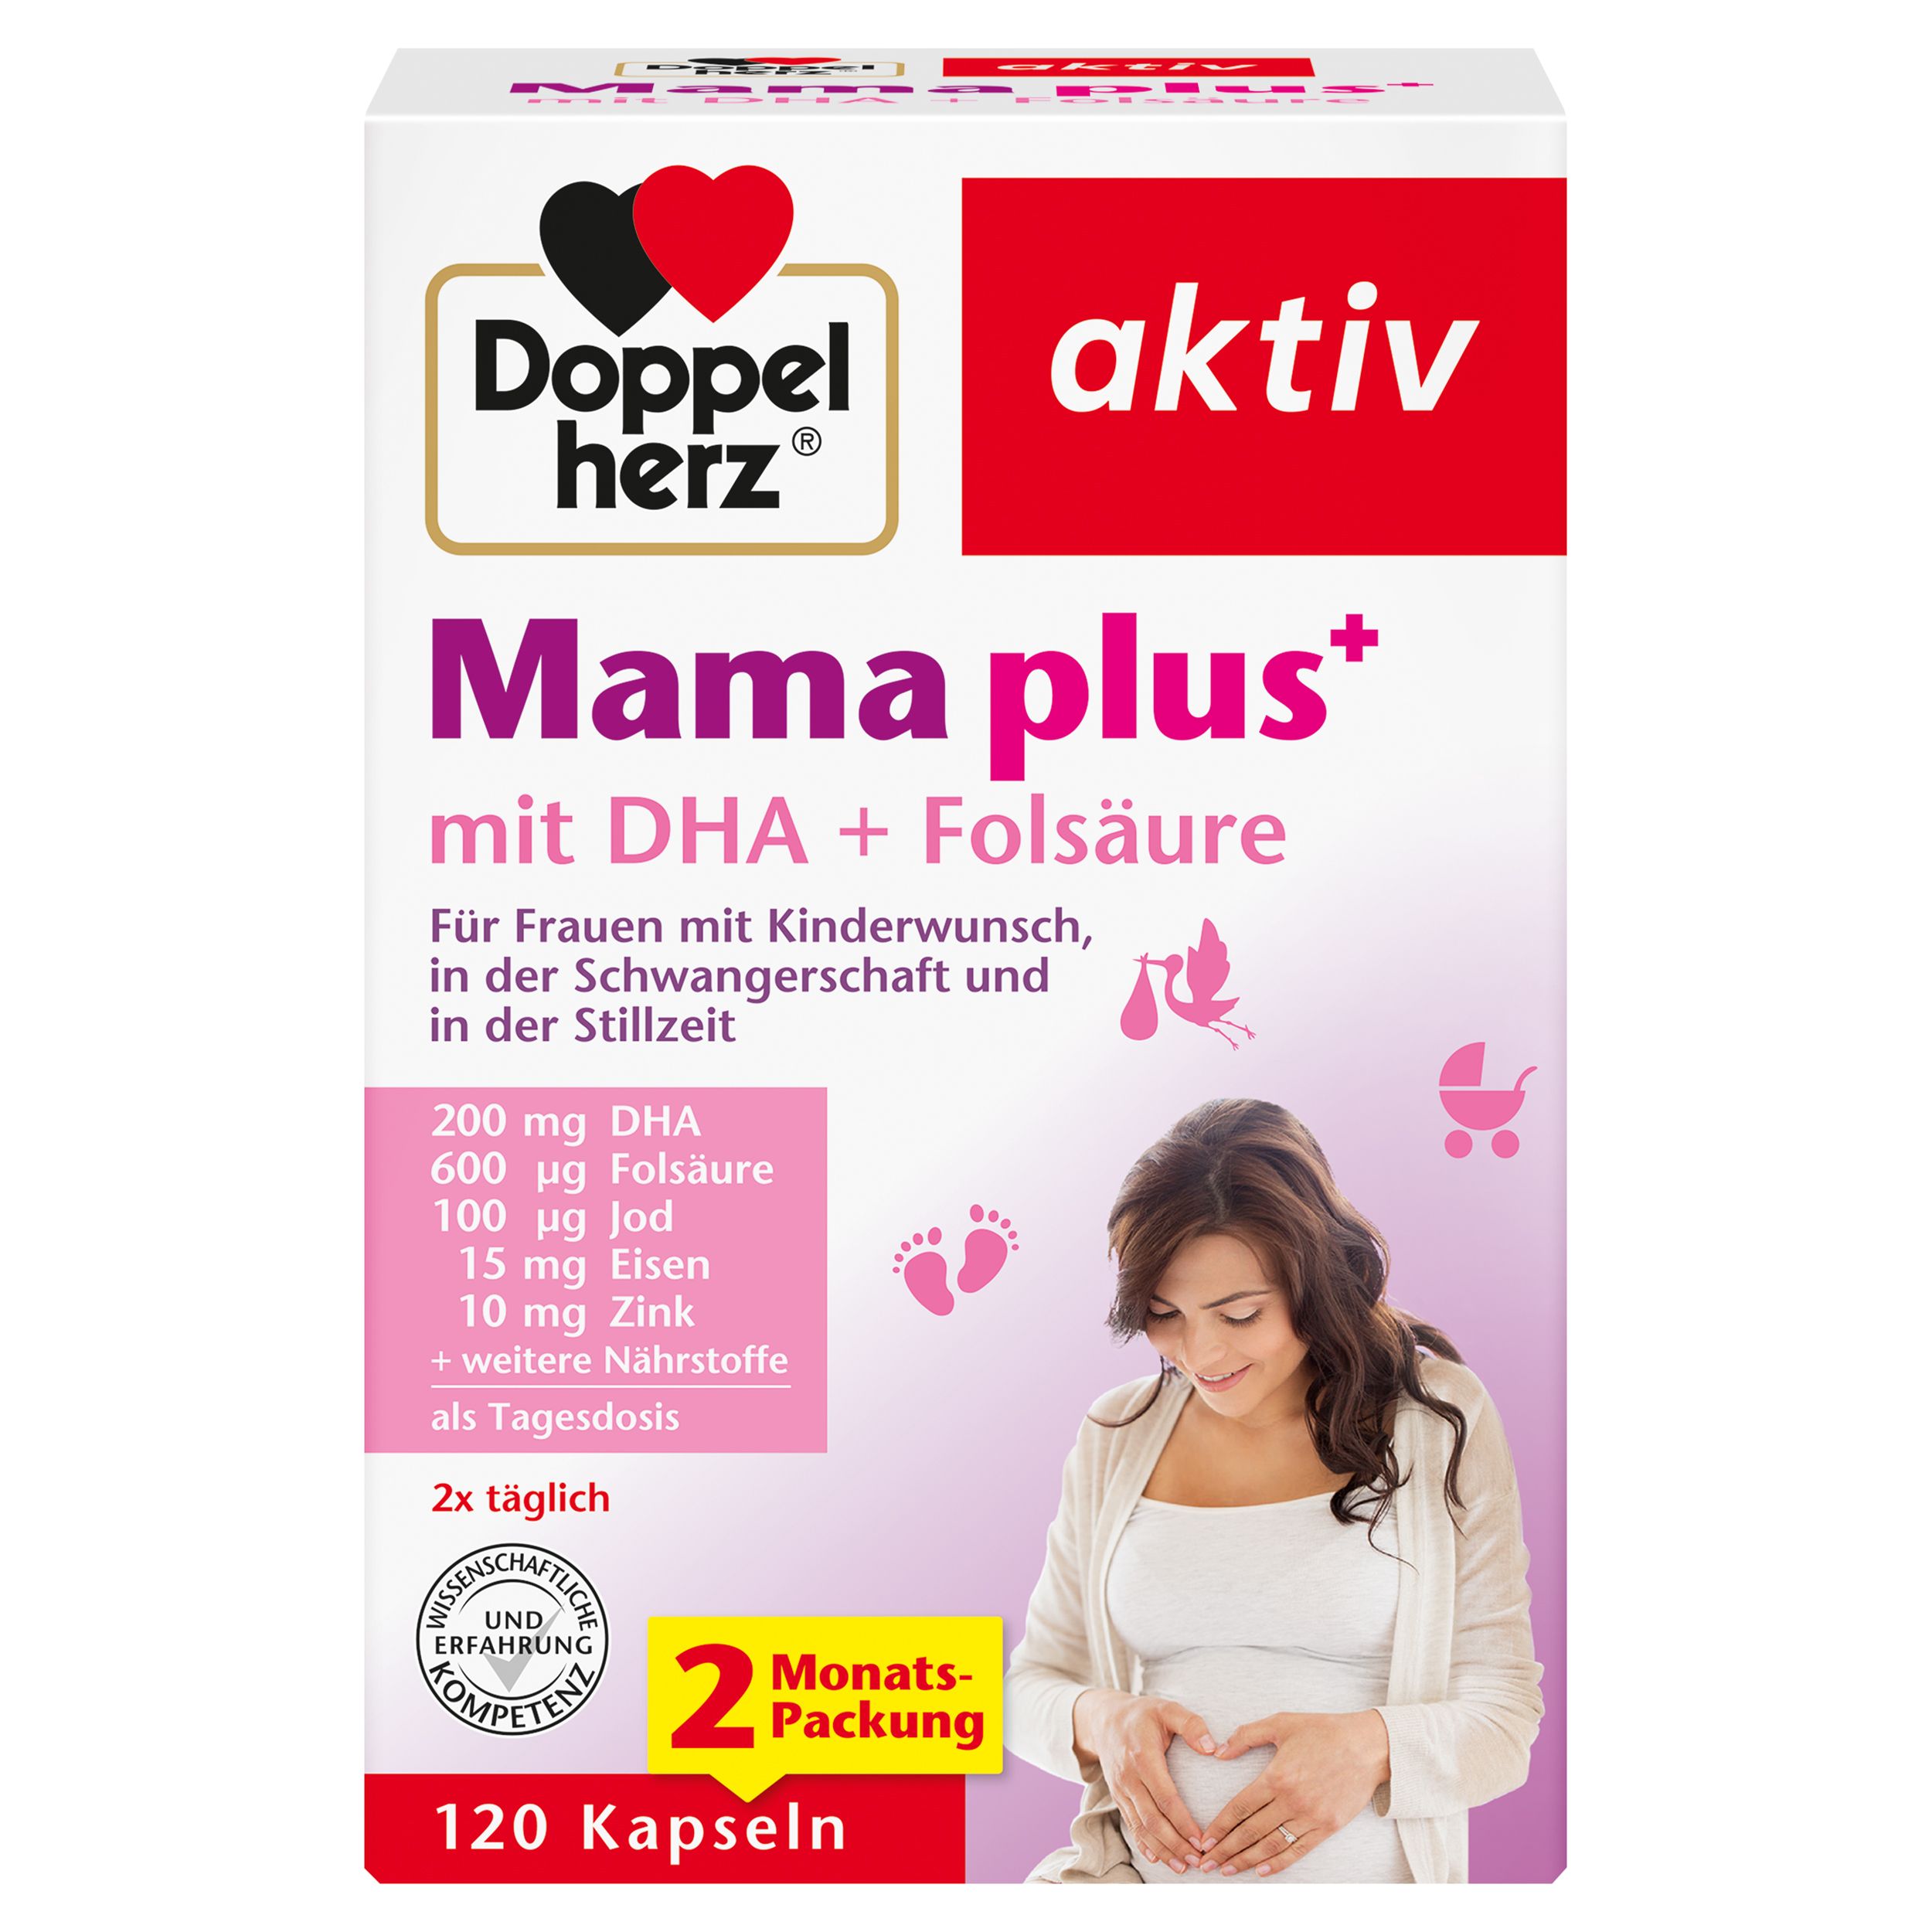 Doppelherz® aktiv Mama plus+ mit DHA + Folsäure